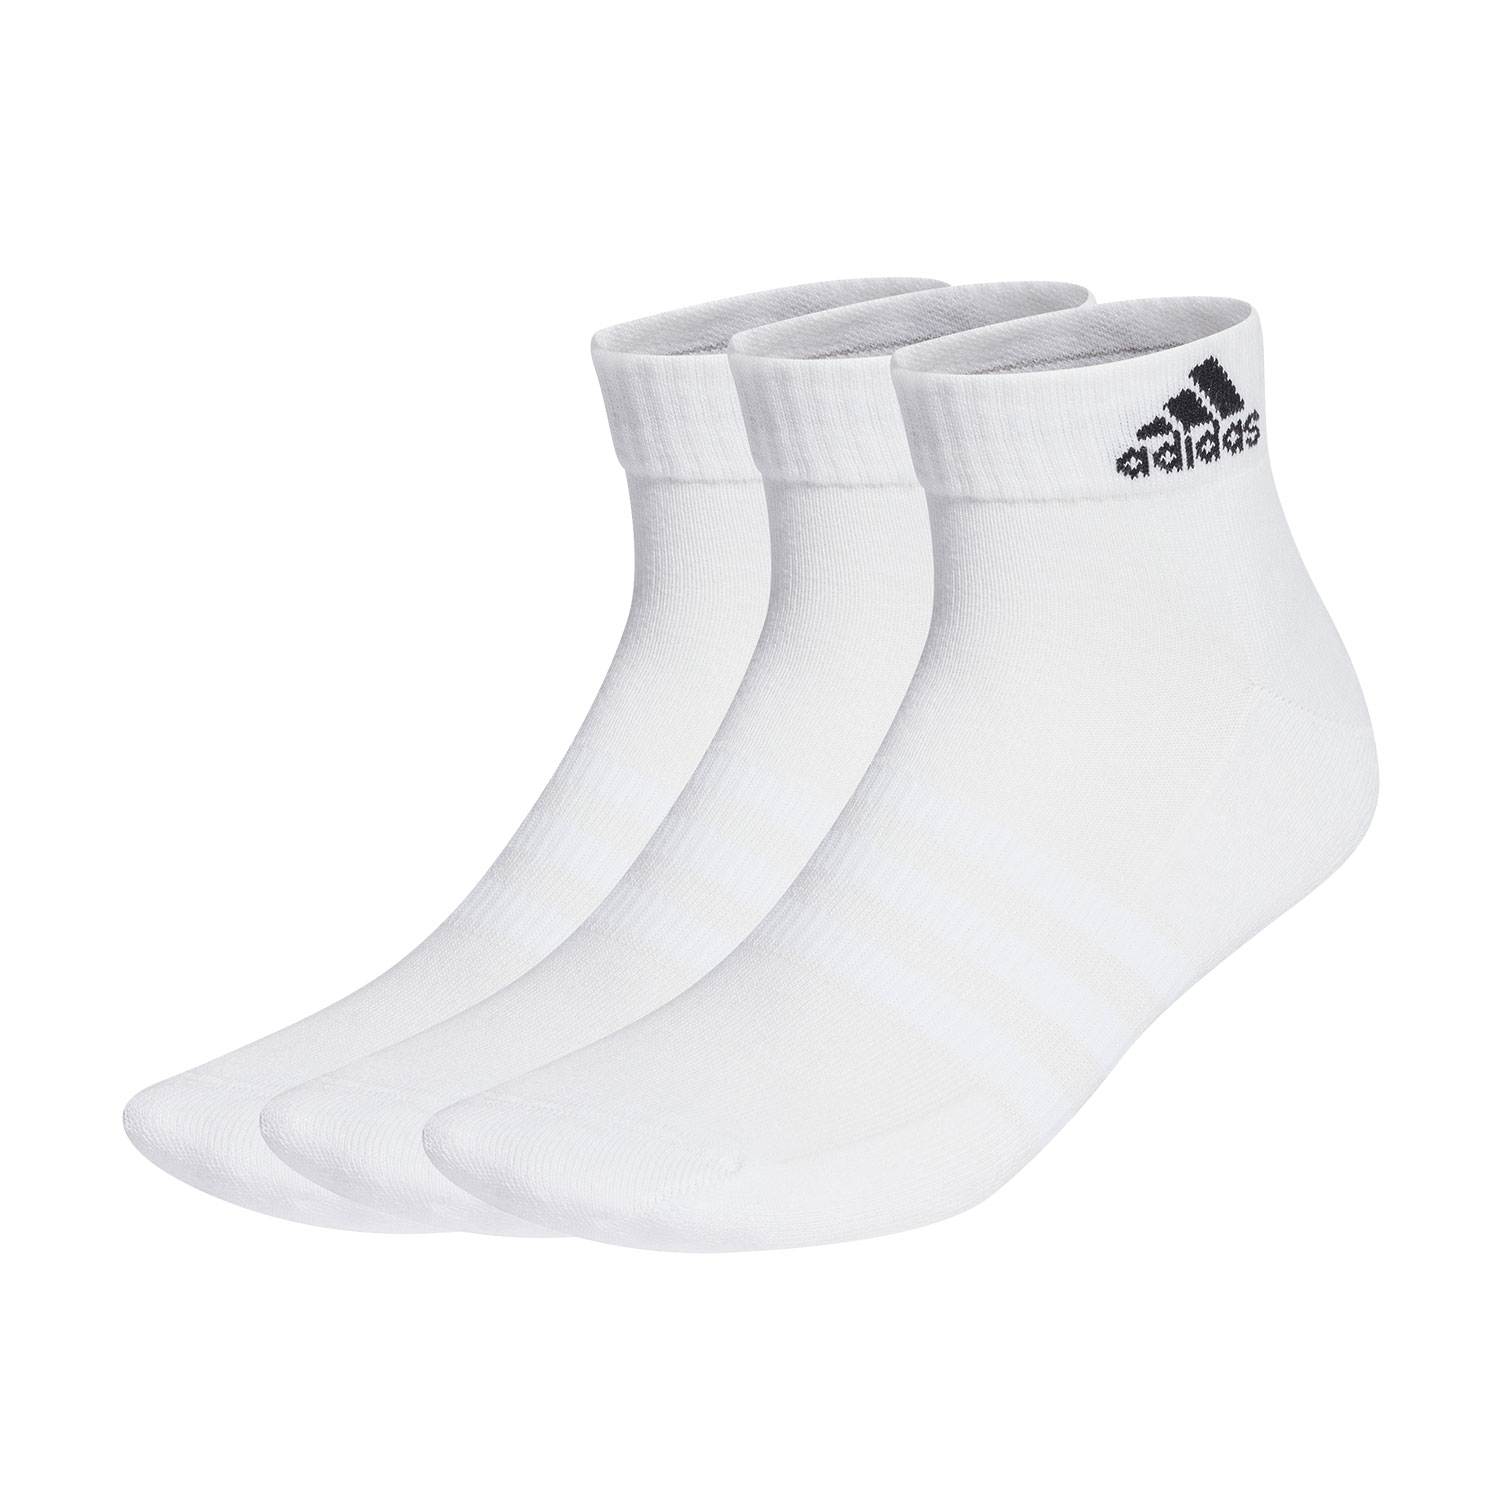 adidas Pro x 3 Padel Socks - White/Black